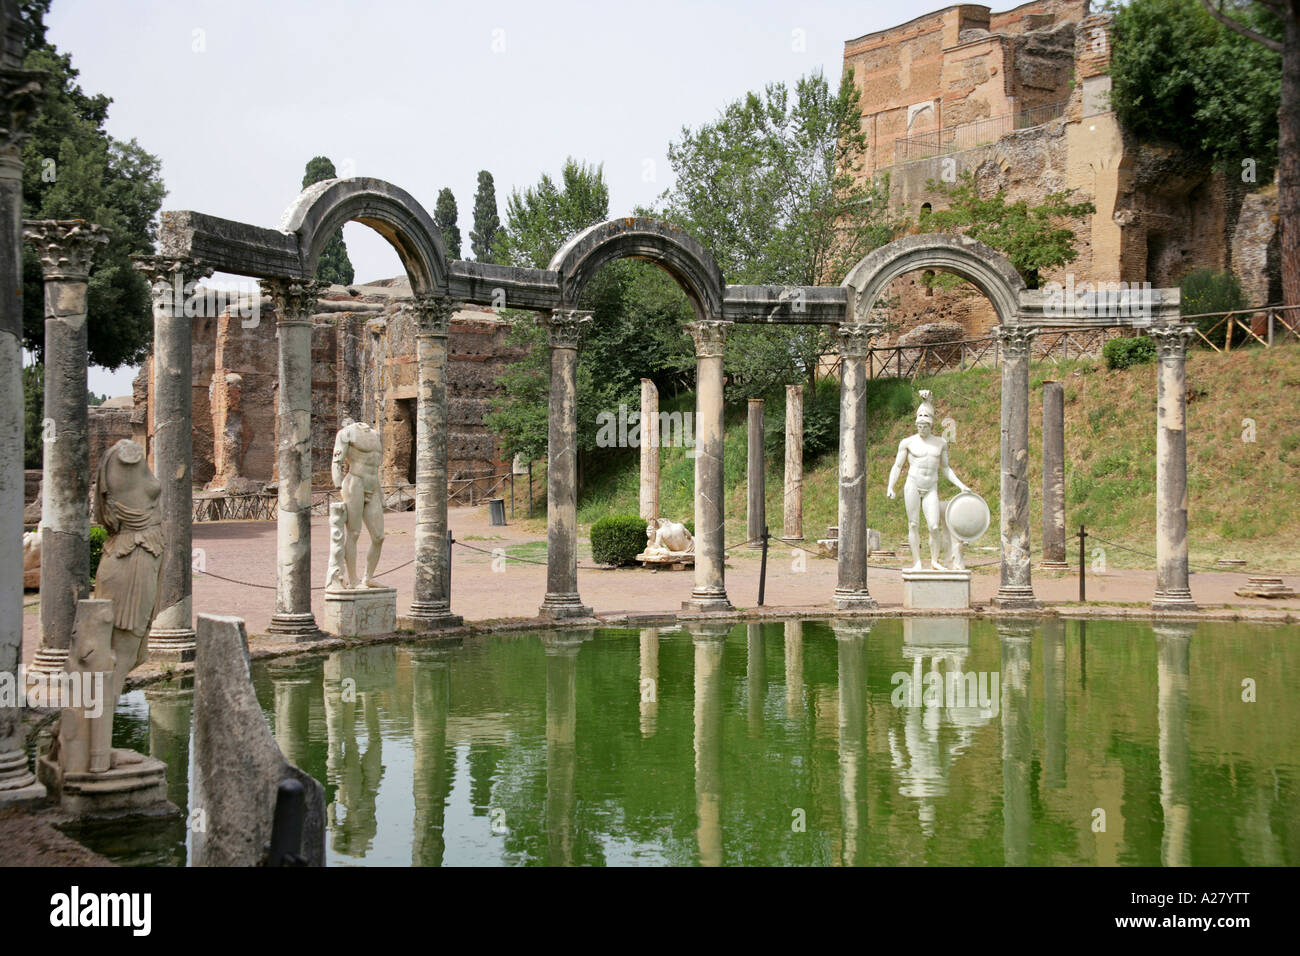 Villa Adriana in View of the Canopus statues at Villa Adrina at Tivoli in Rome Stock Photo - Alamy